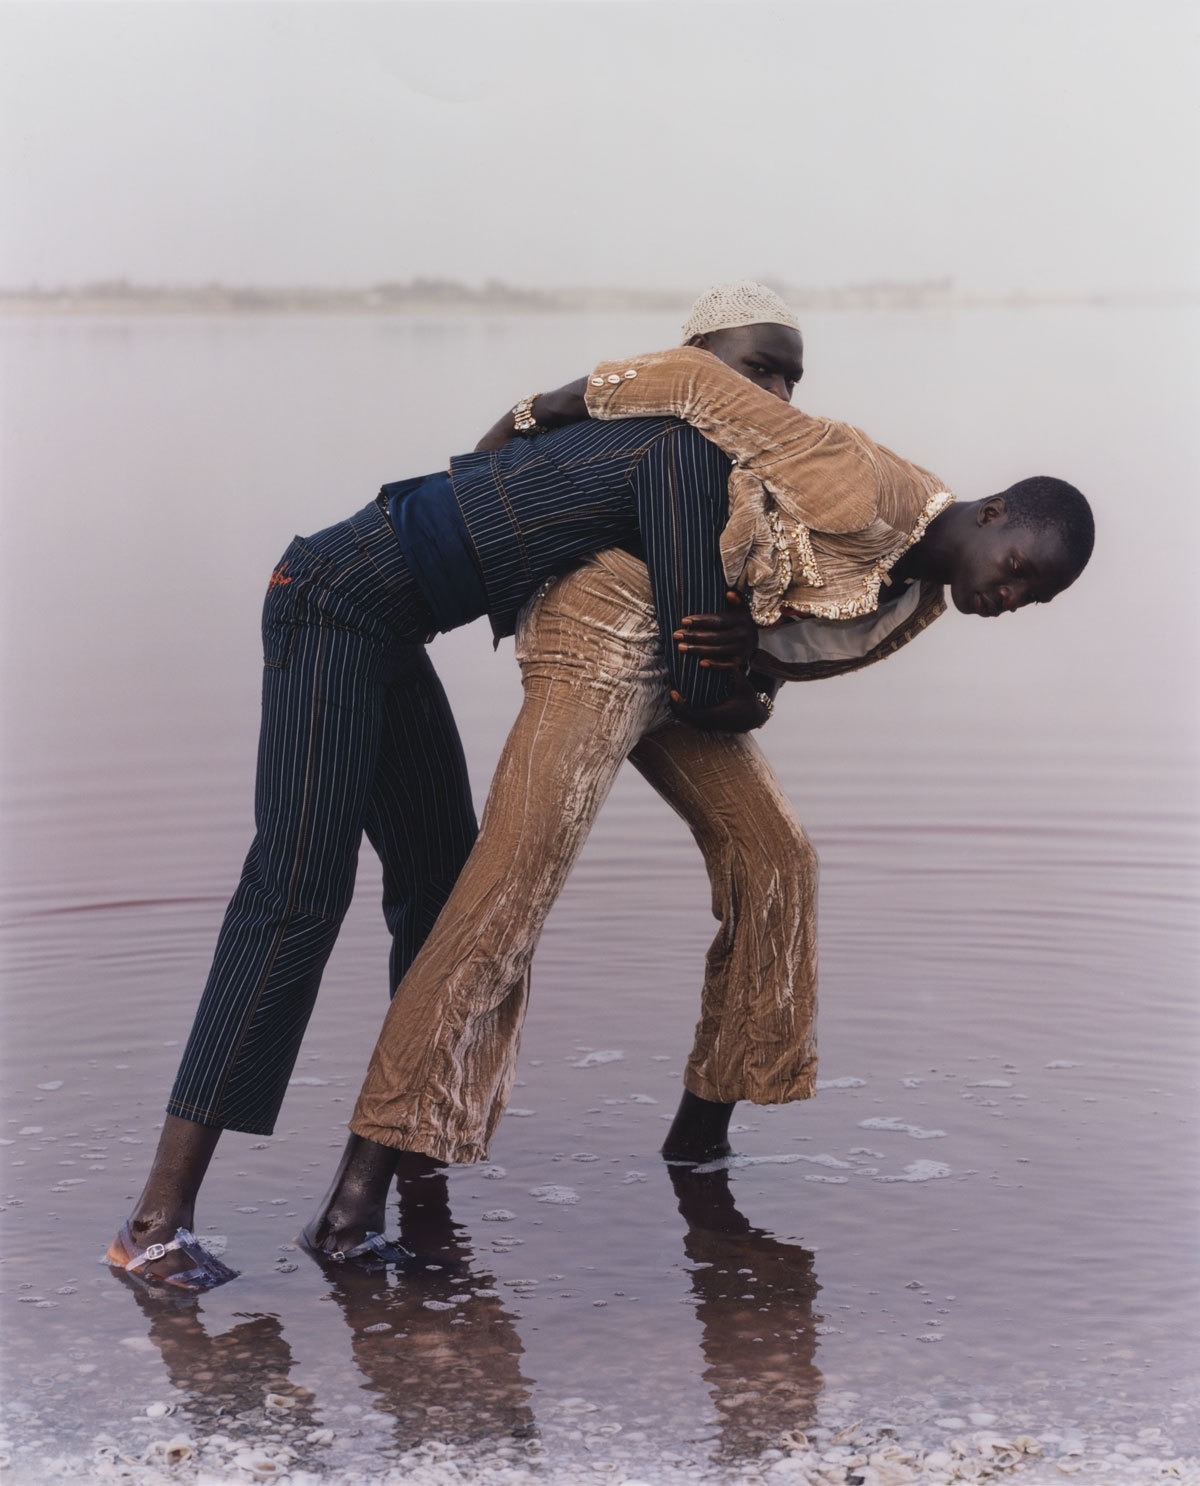 1outsid3r: Designer Grace Wales Bonner travels to Dakar, Senegal, with photographer